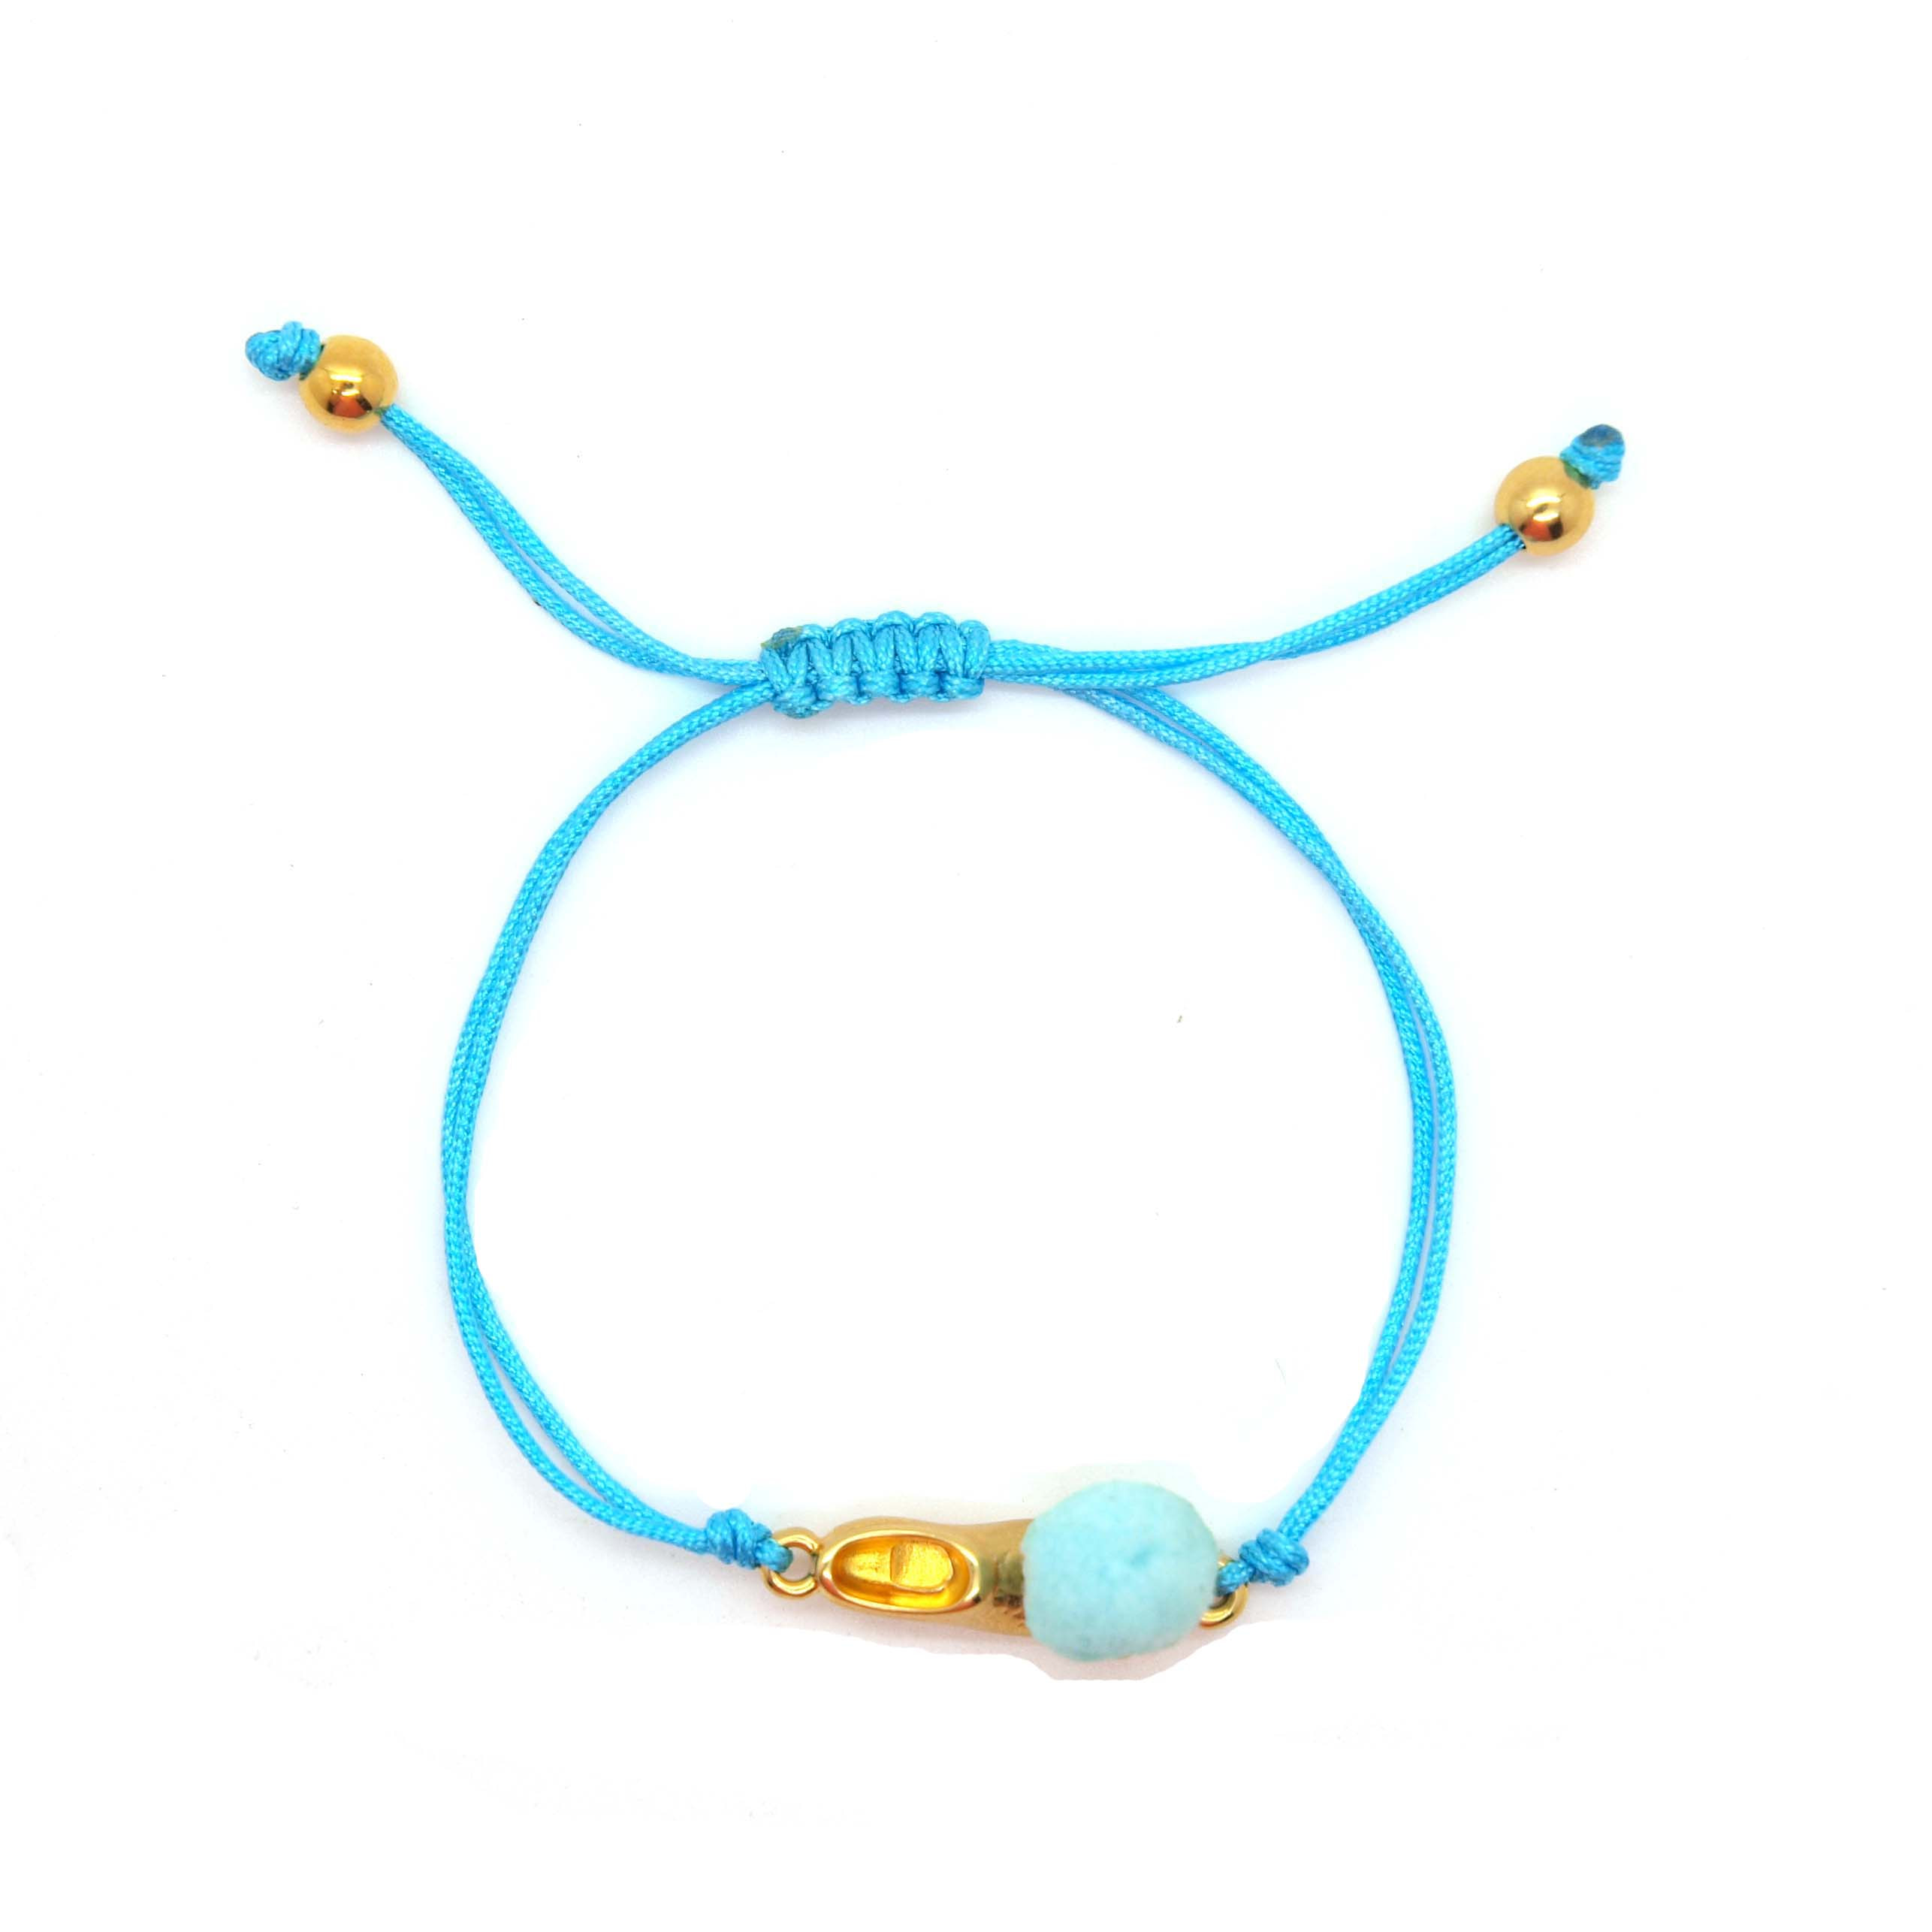 SALE World Bangle Bracelet Adjustable Charm Bracelet - Etsy | Bangle  bracelets, Adjustable bangle bracelet, Bangles